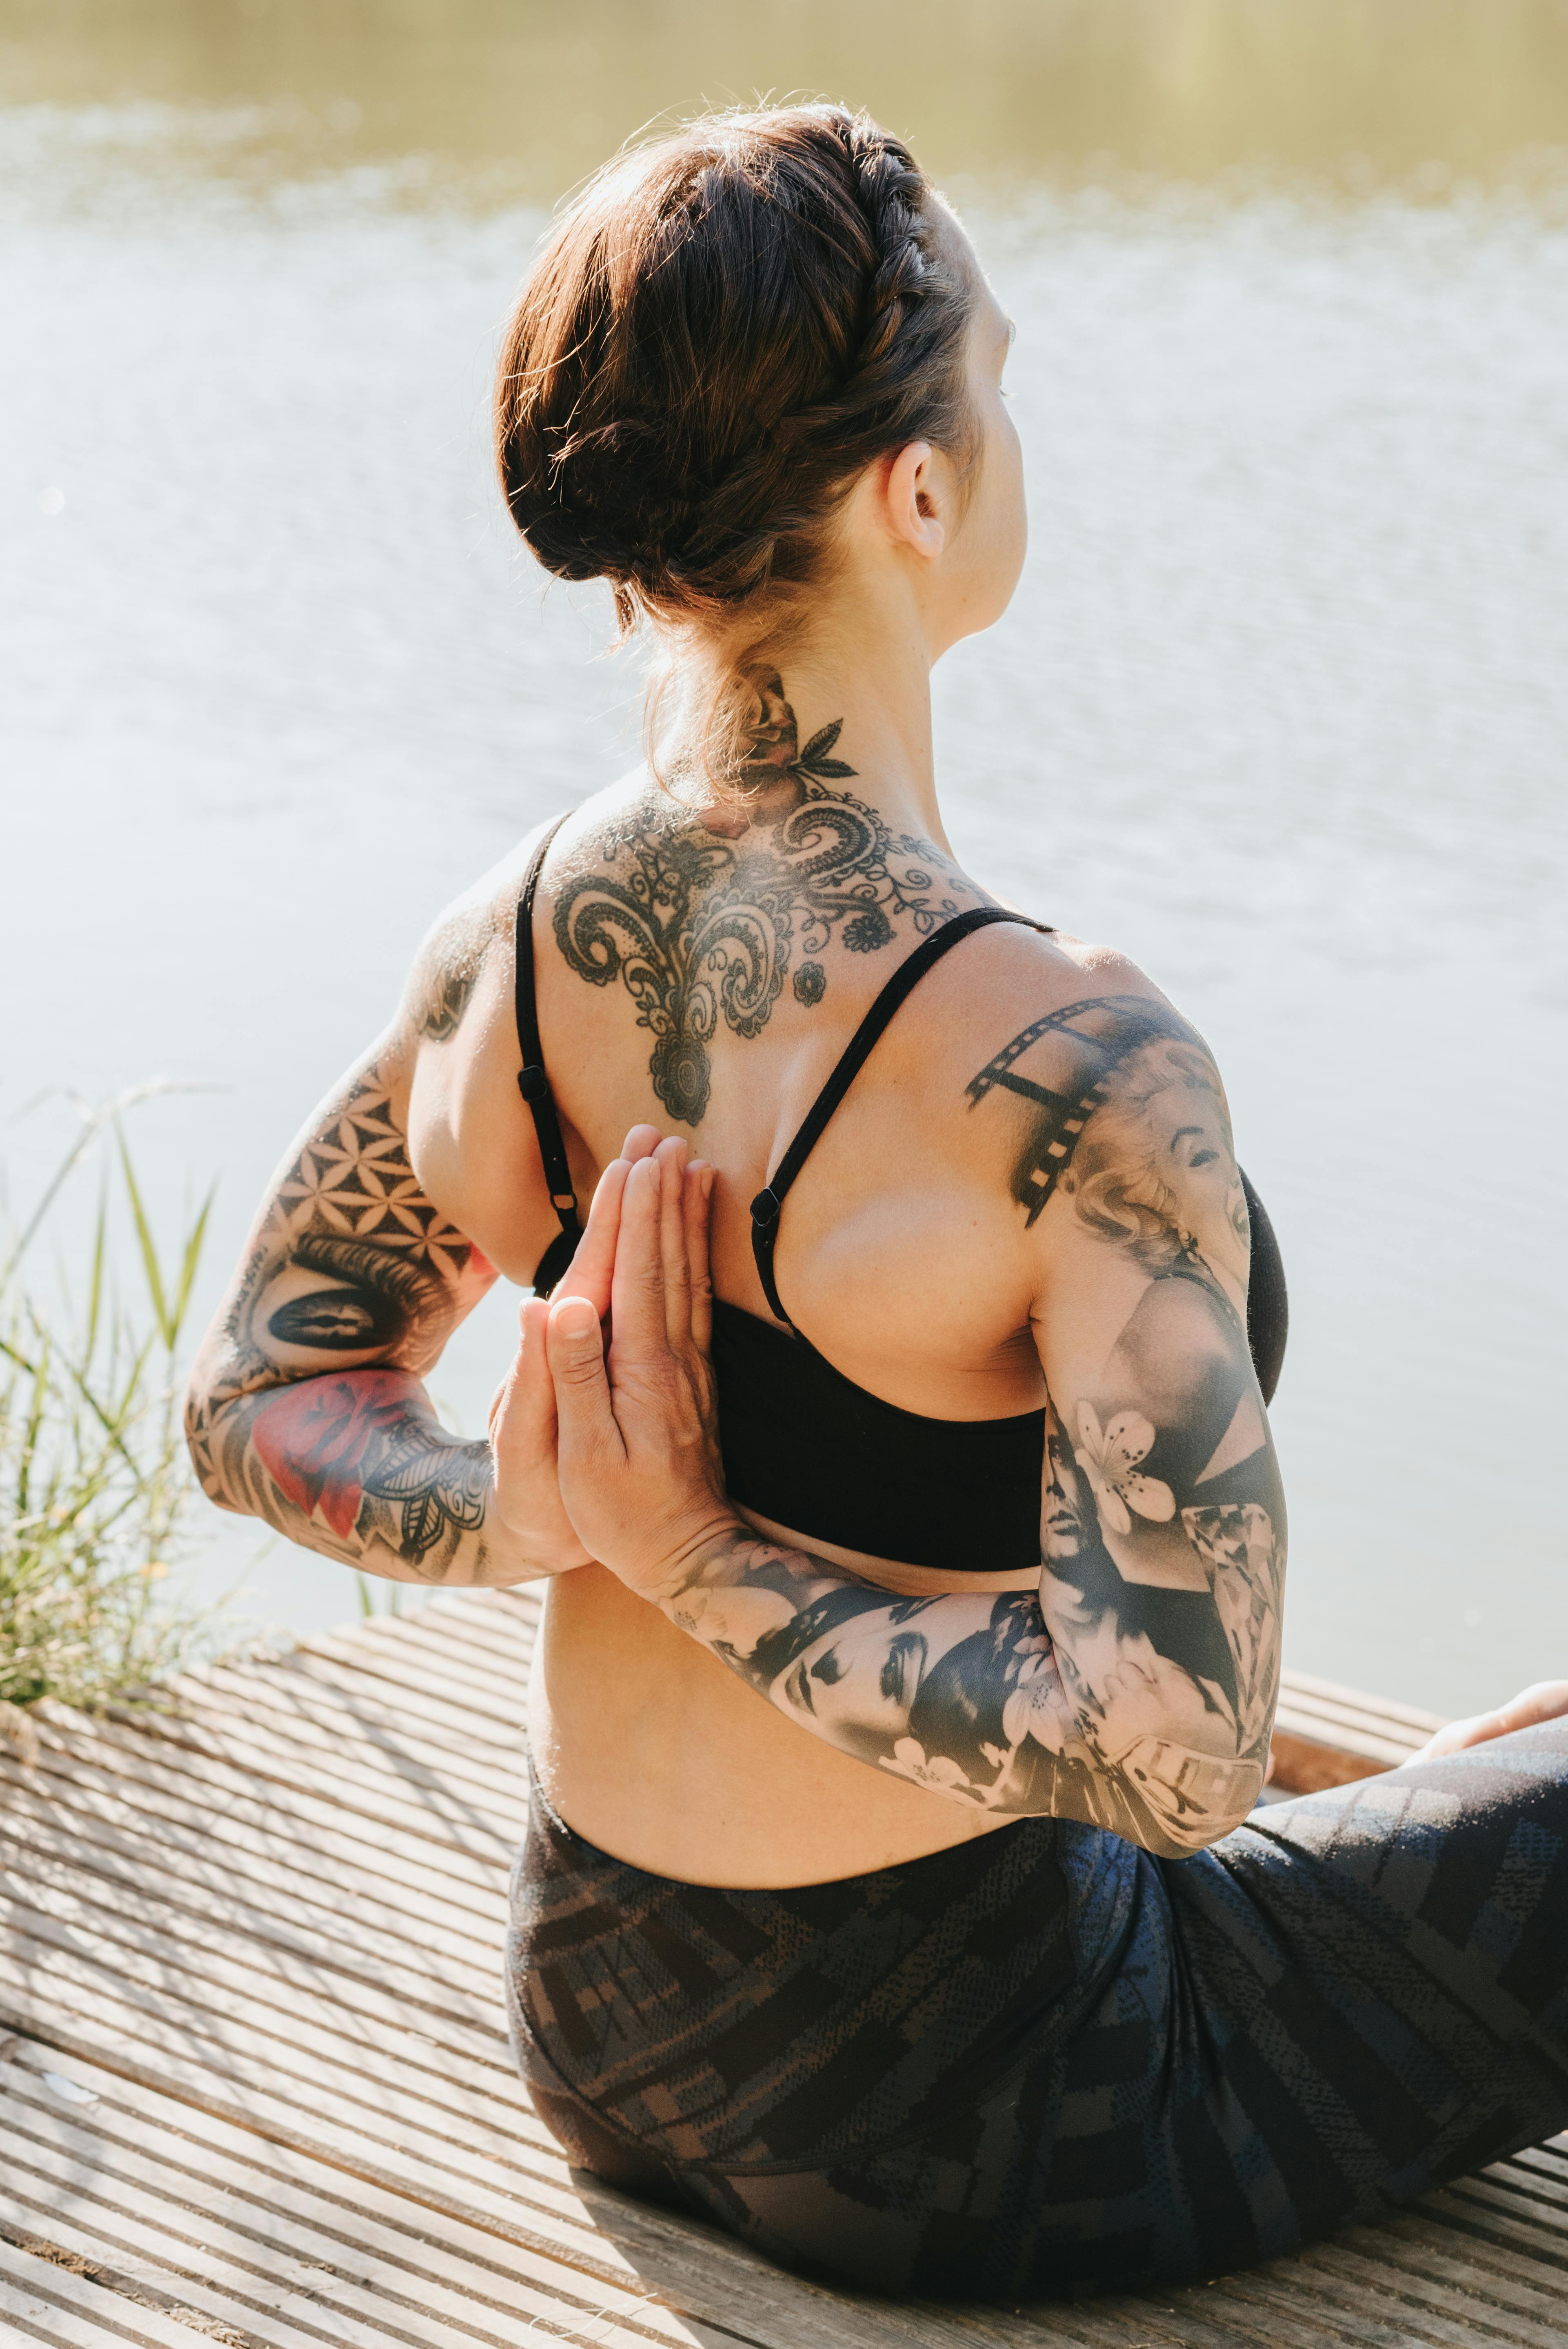 Yoga Poses for Grounding and Turning Inward